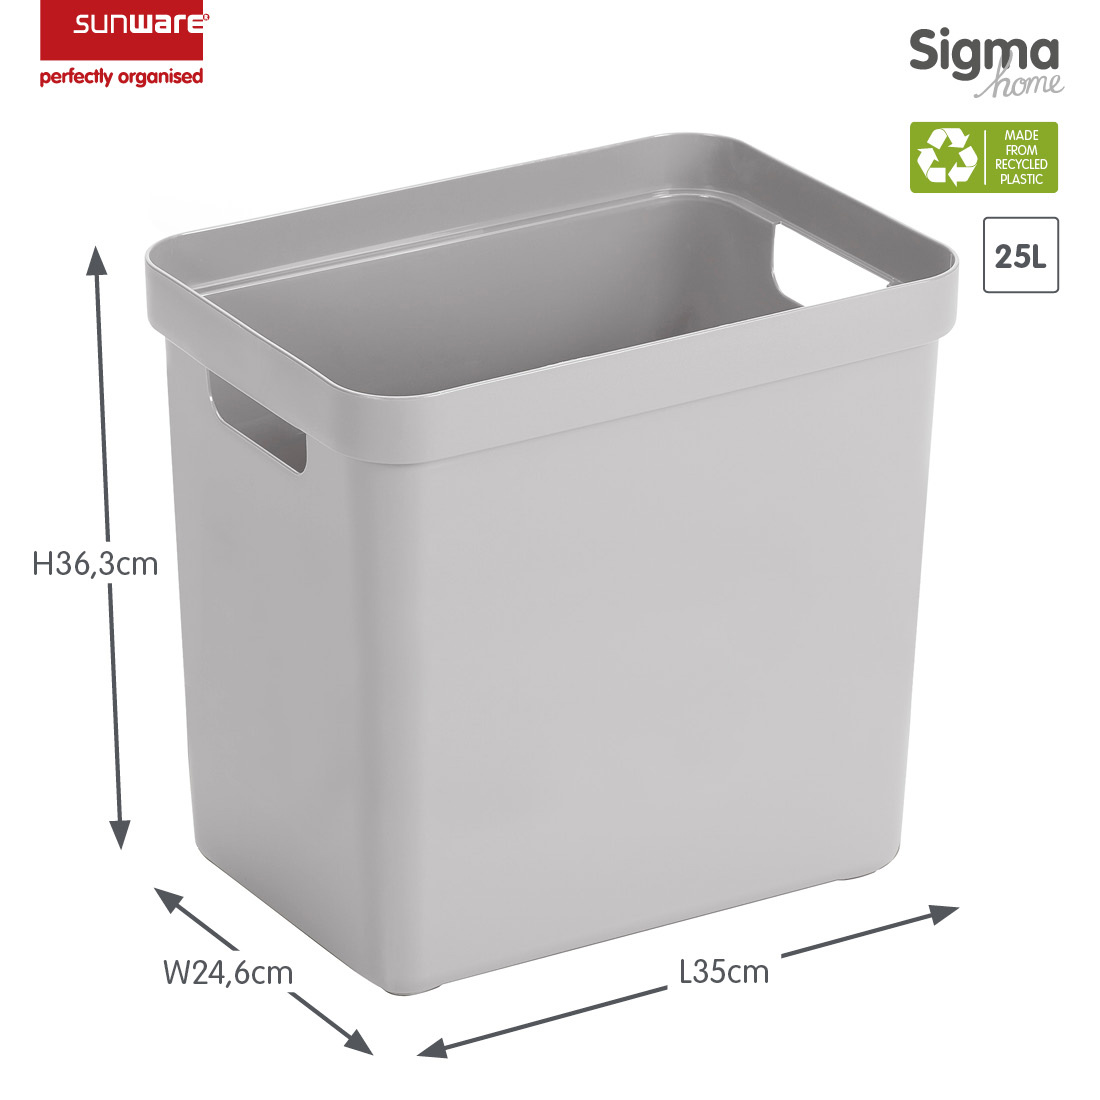 Sigma home storage box 25L grey